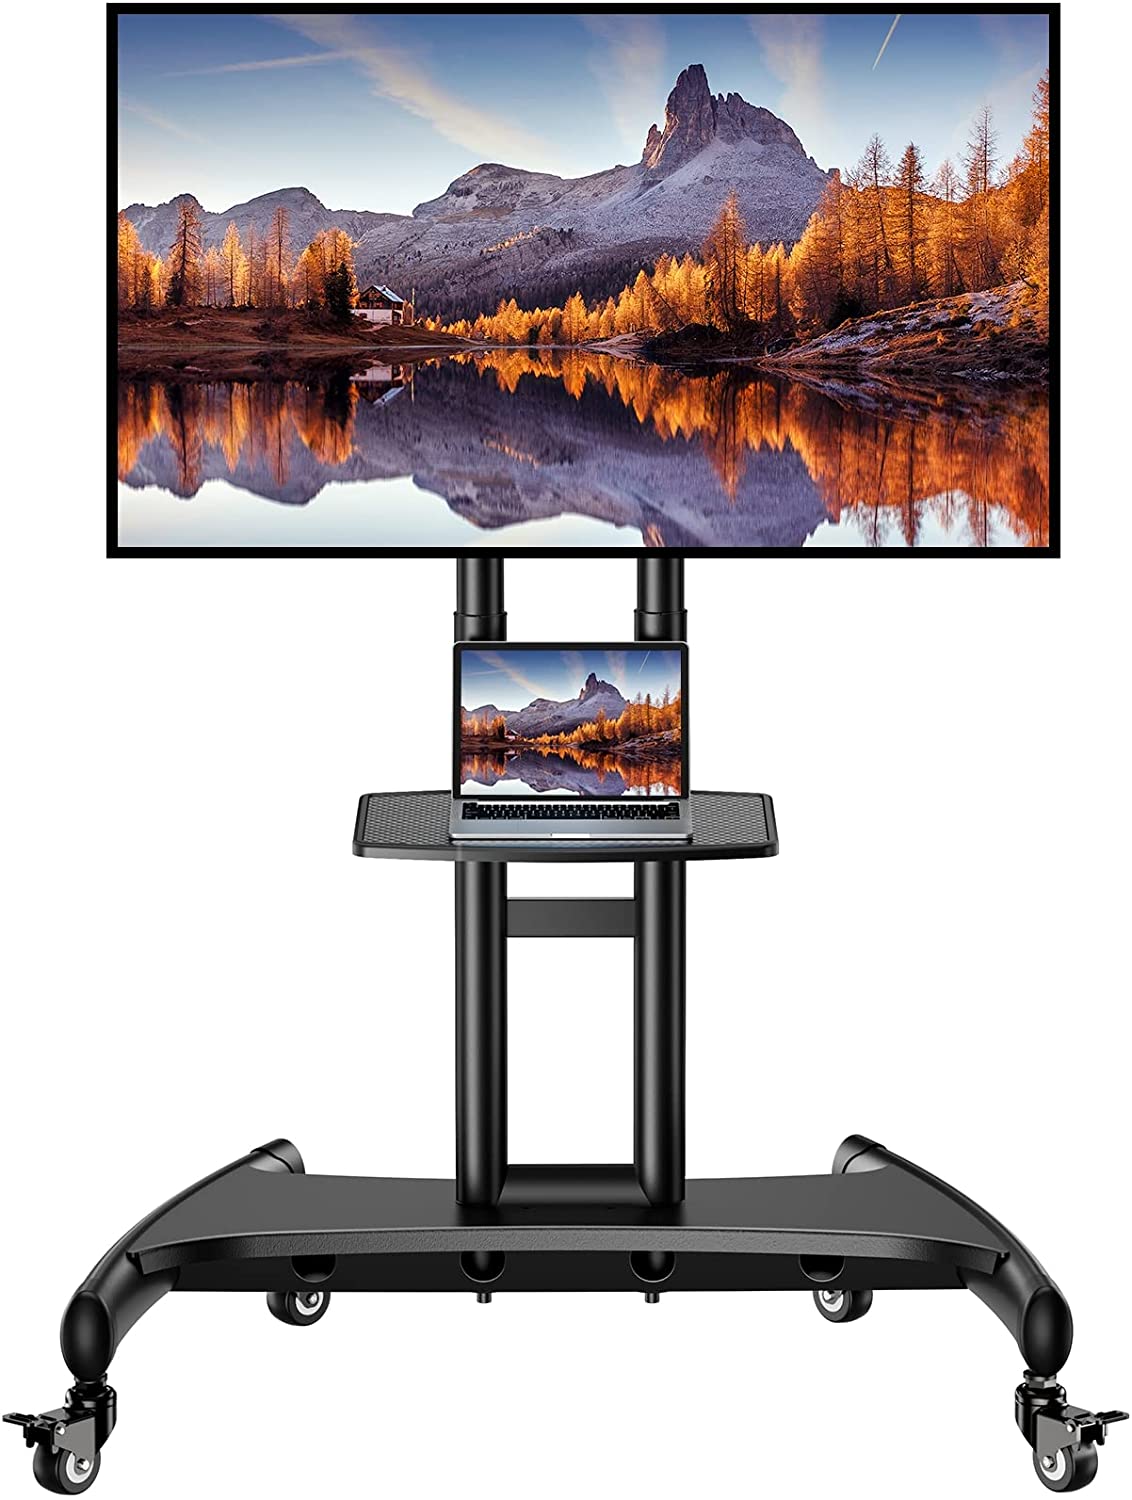 Perlegear Height Adjustable Mobile TV Cart w/ Wheels & Shelf (for 32-75" TVs) $69.60 + Free Shipping